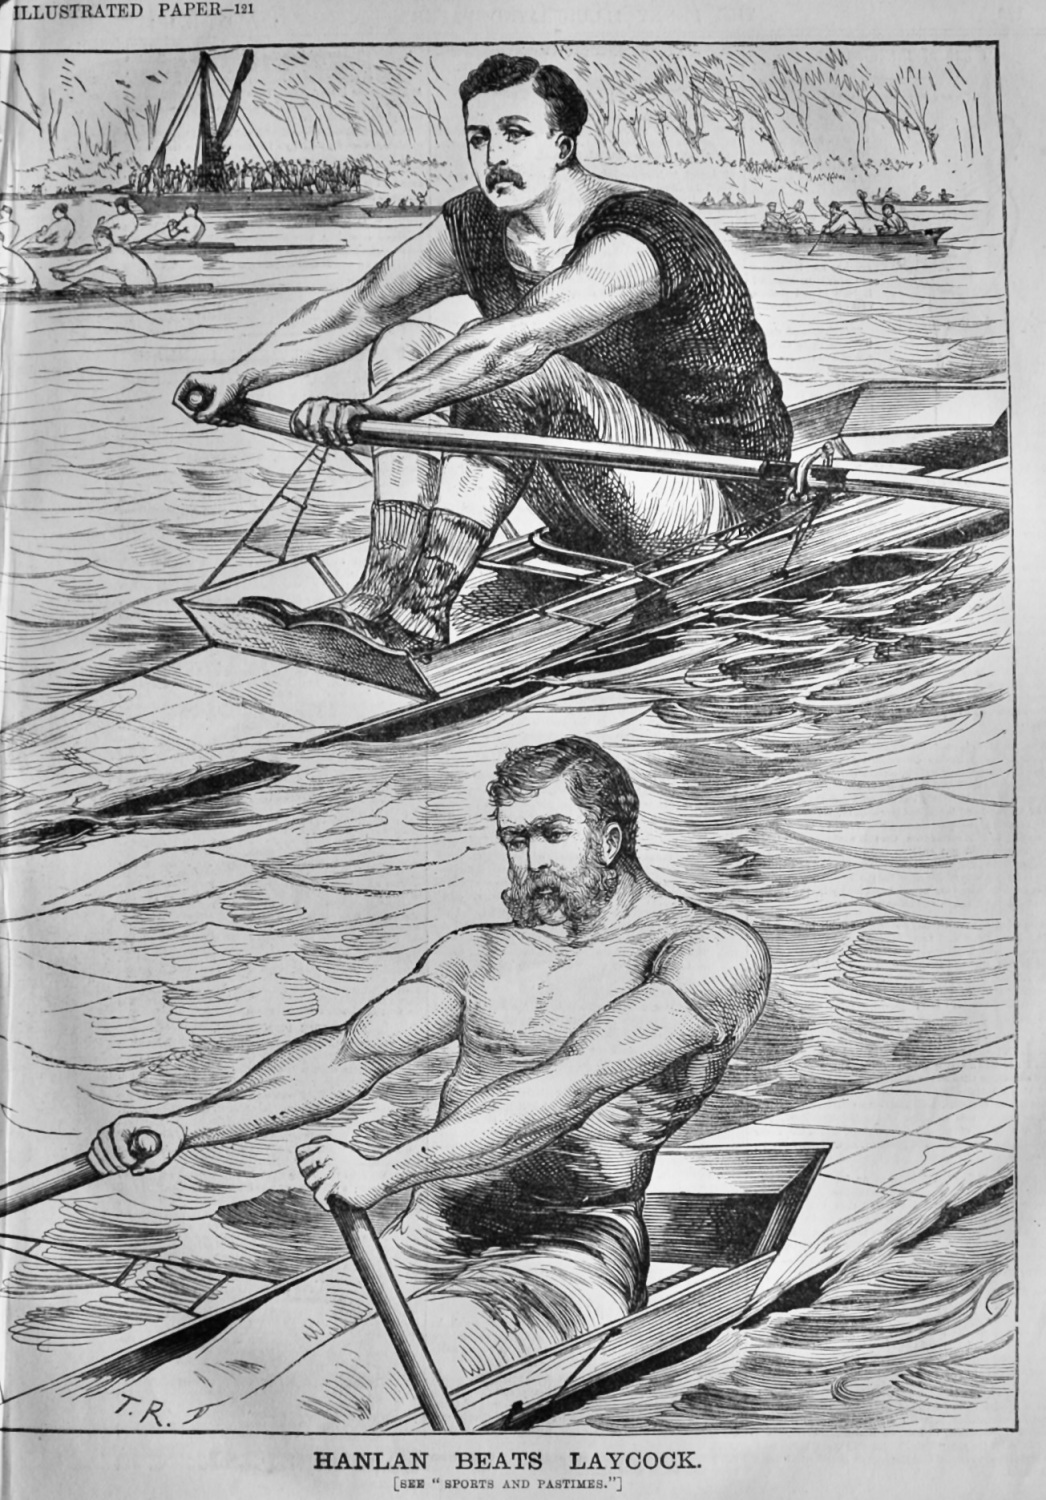 Hanlon Beats Laycock.  (Sculling)  1881.